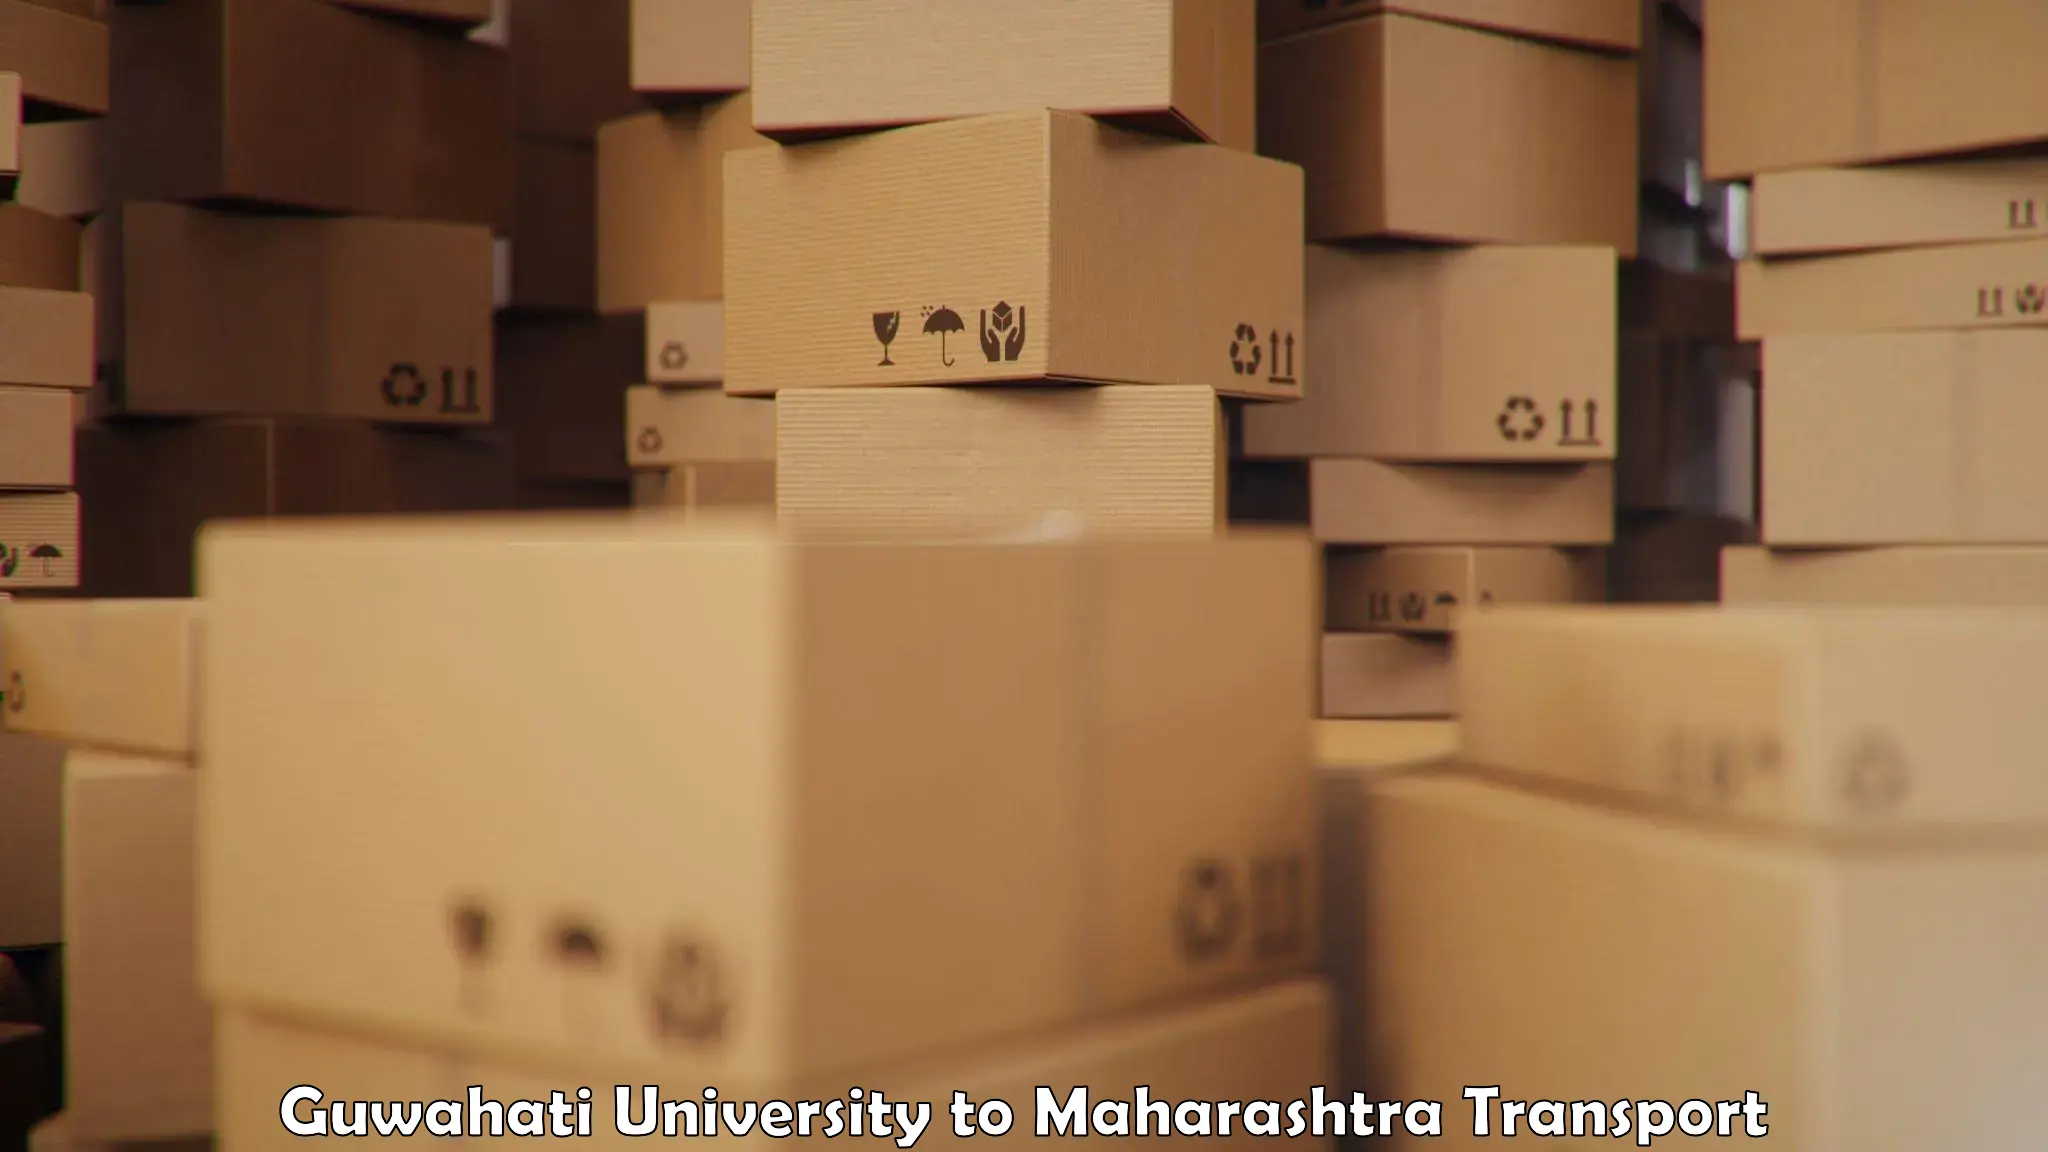 Transportation services Guwahati University to Ghatanji